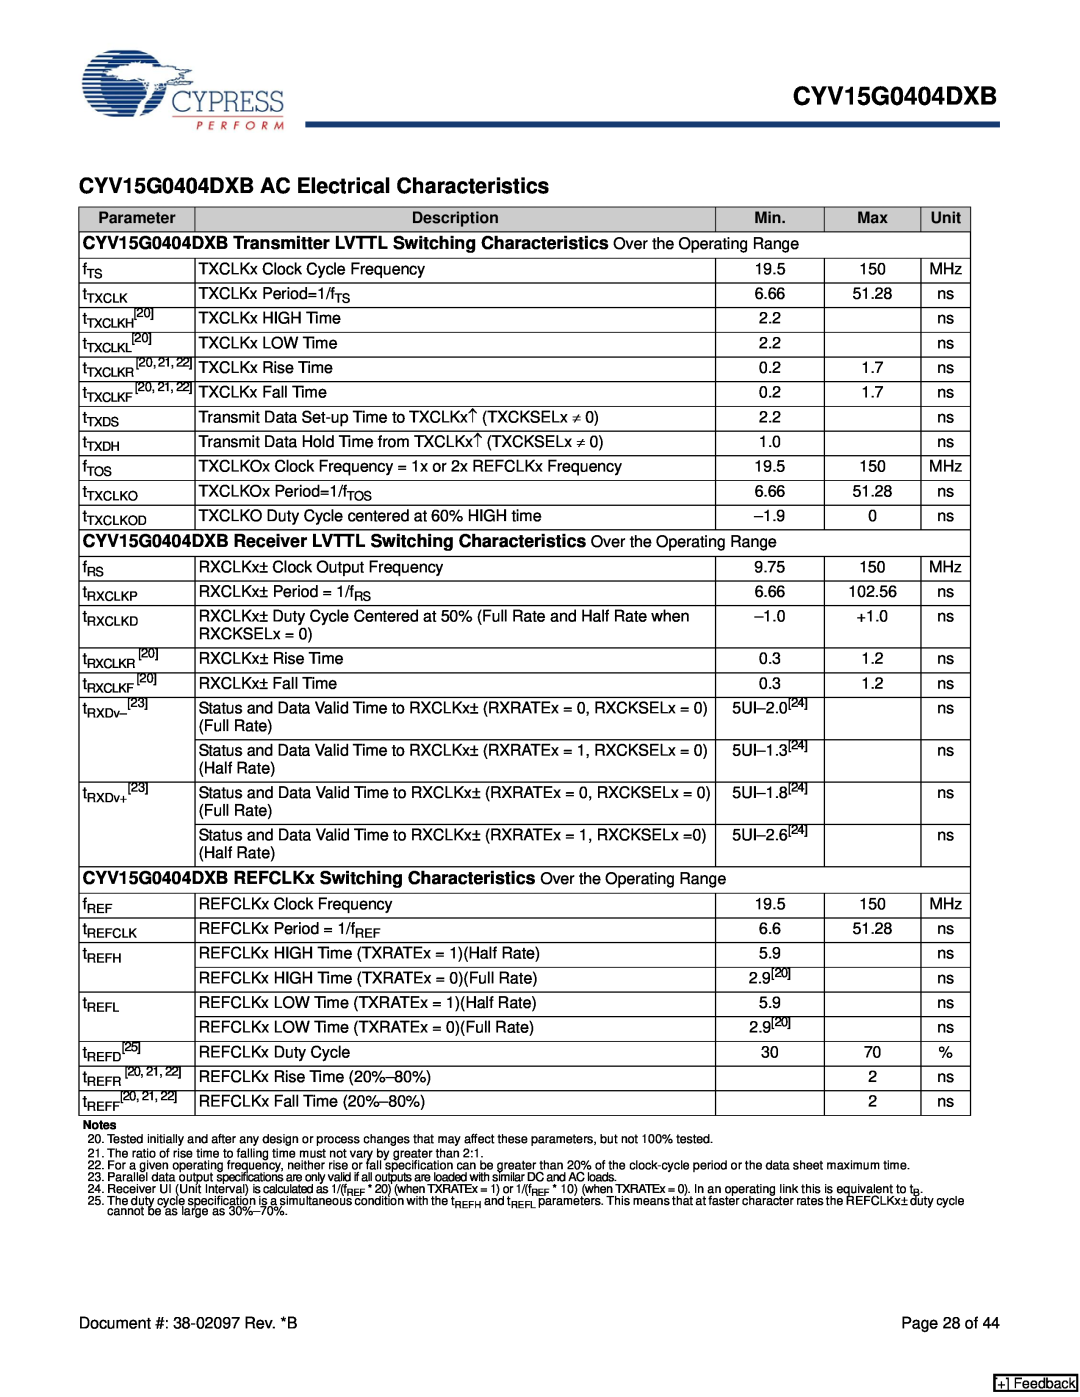 Cypress manual CYV15G0404DXB AC Electrical Characteristics 